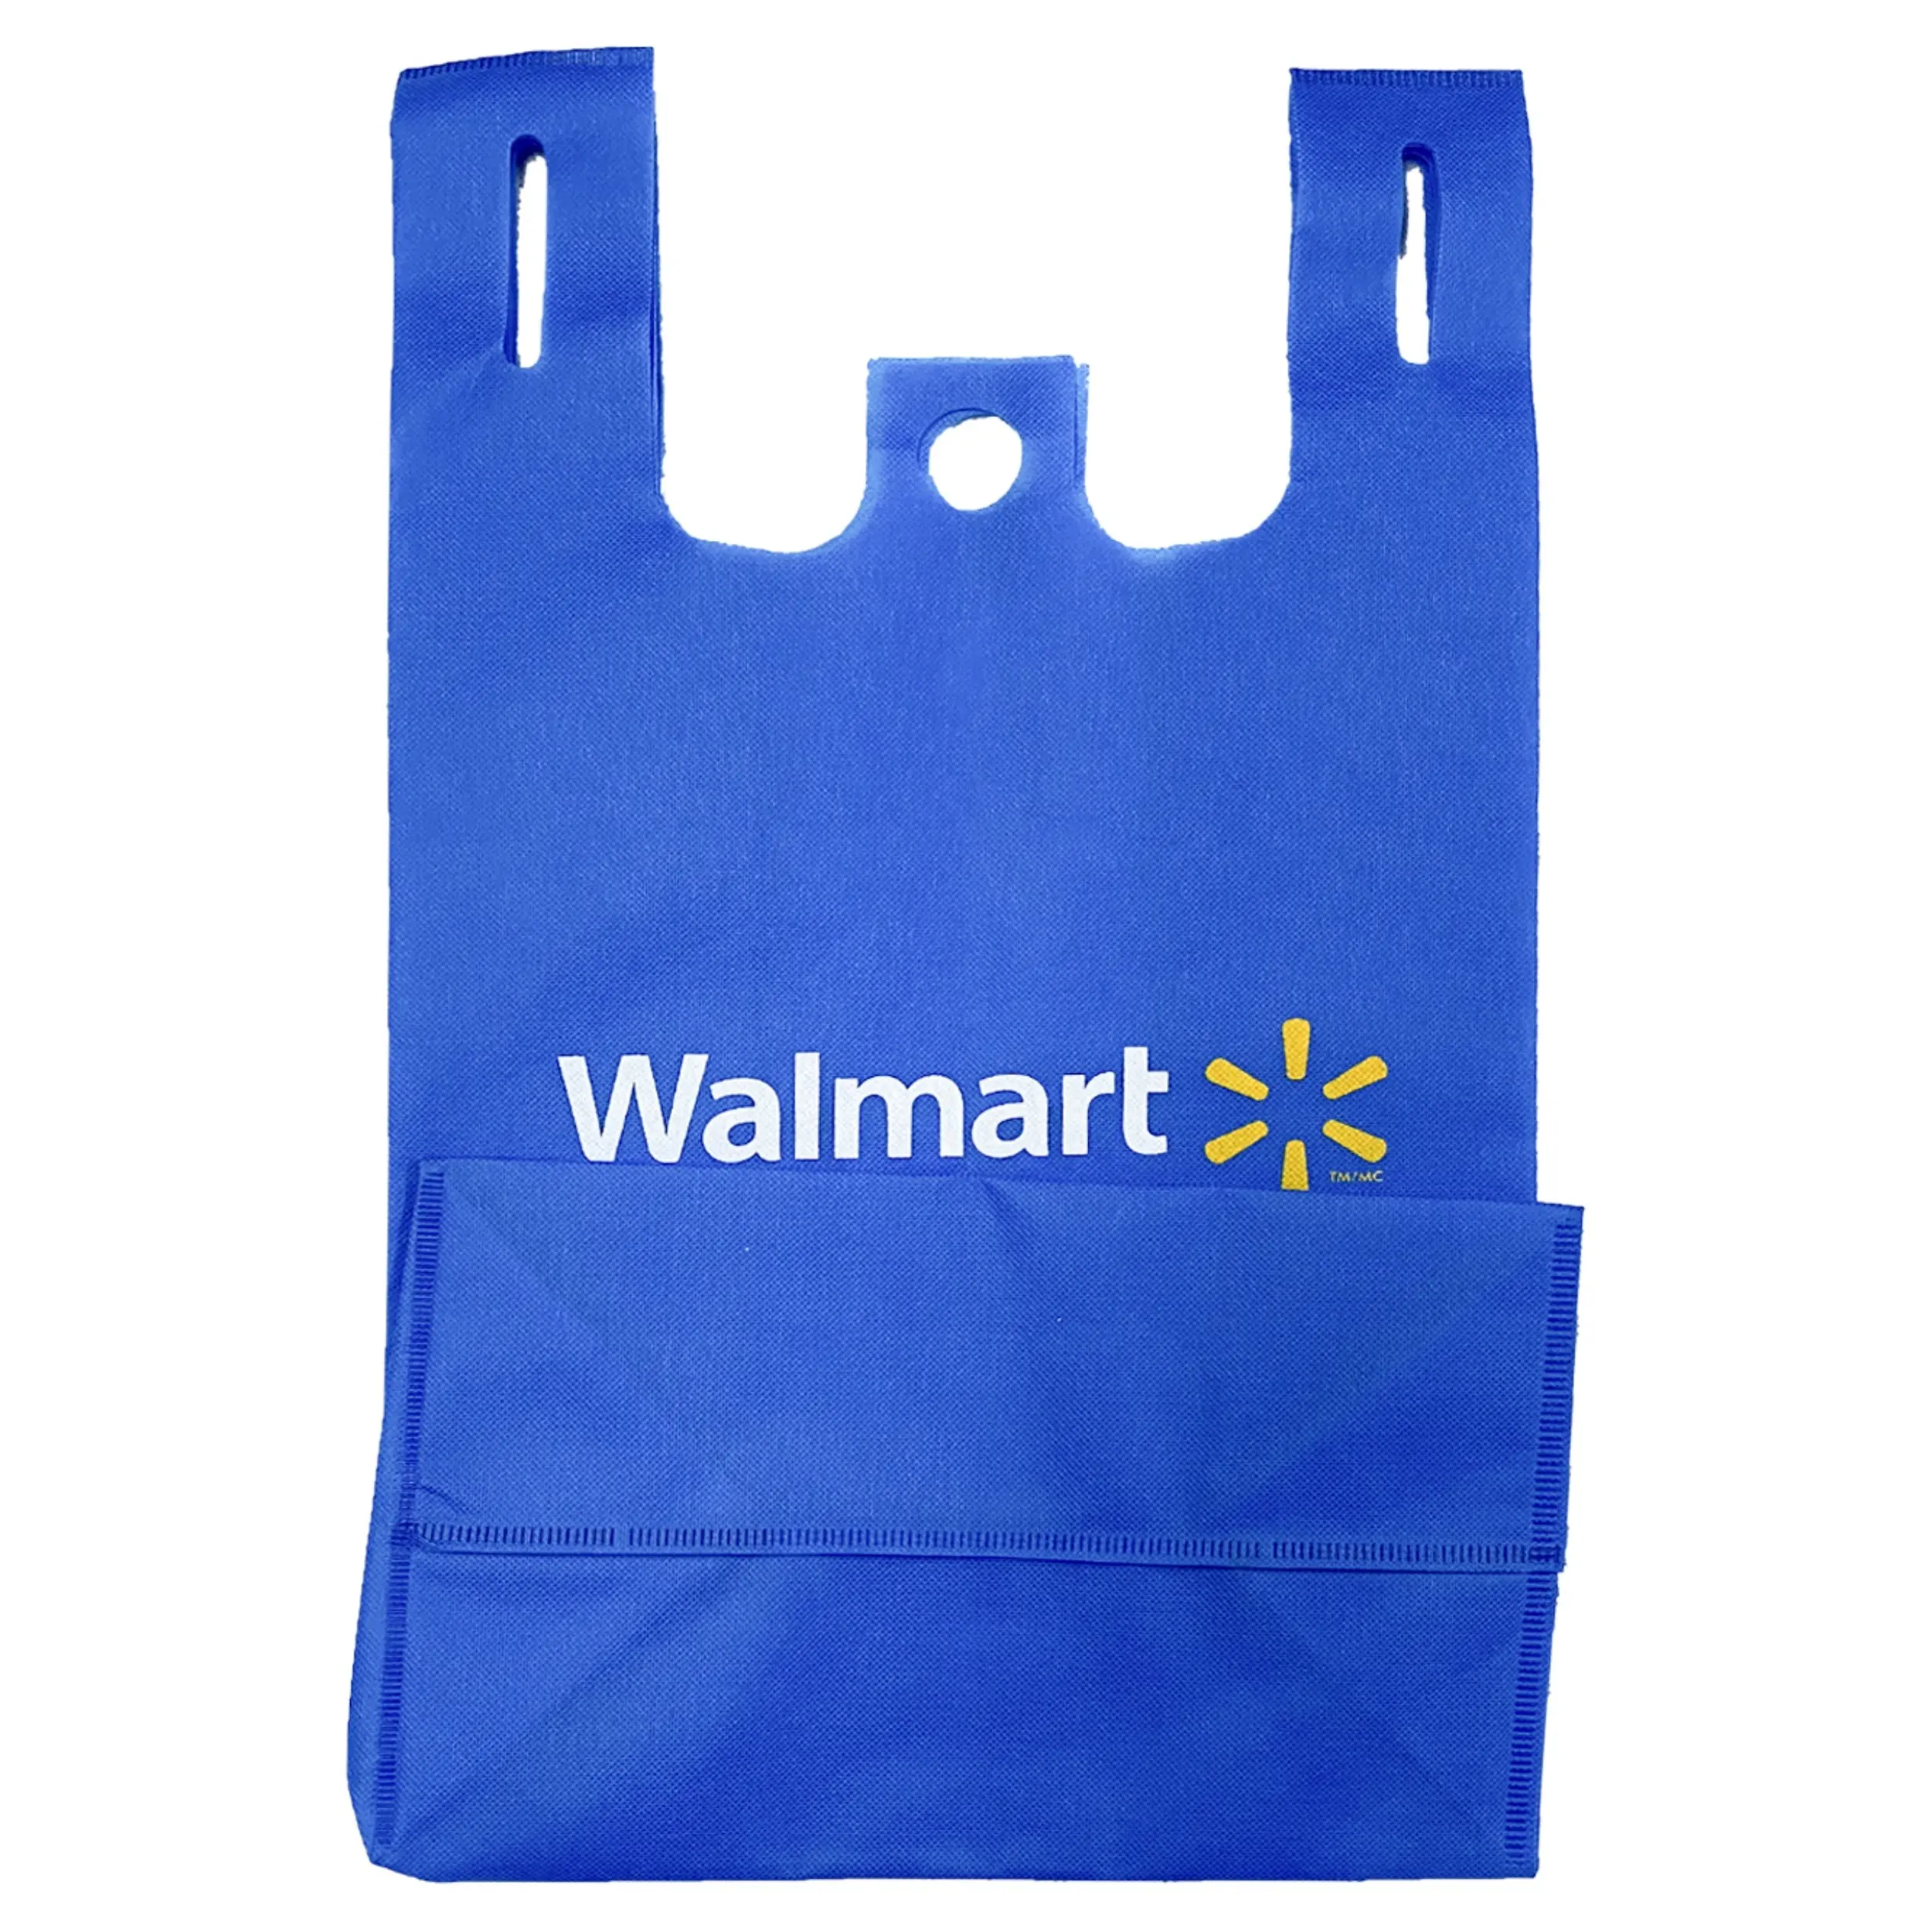 Camiseta de compras de fondo plano de supermercado no tejida XL personalizada, Walmart bolso de mano, camiseta de fondo cuadrado no tejida, chaleco, bolsas recicladas